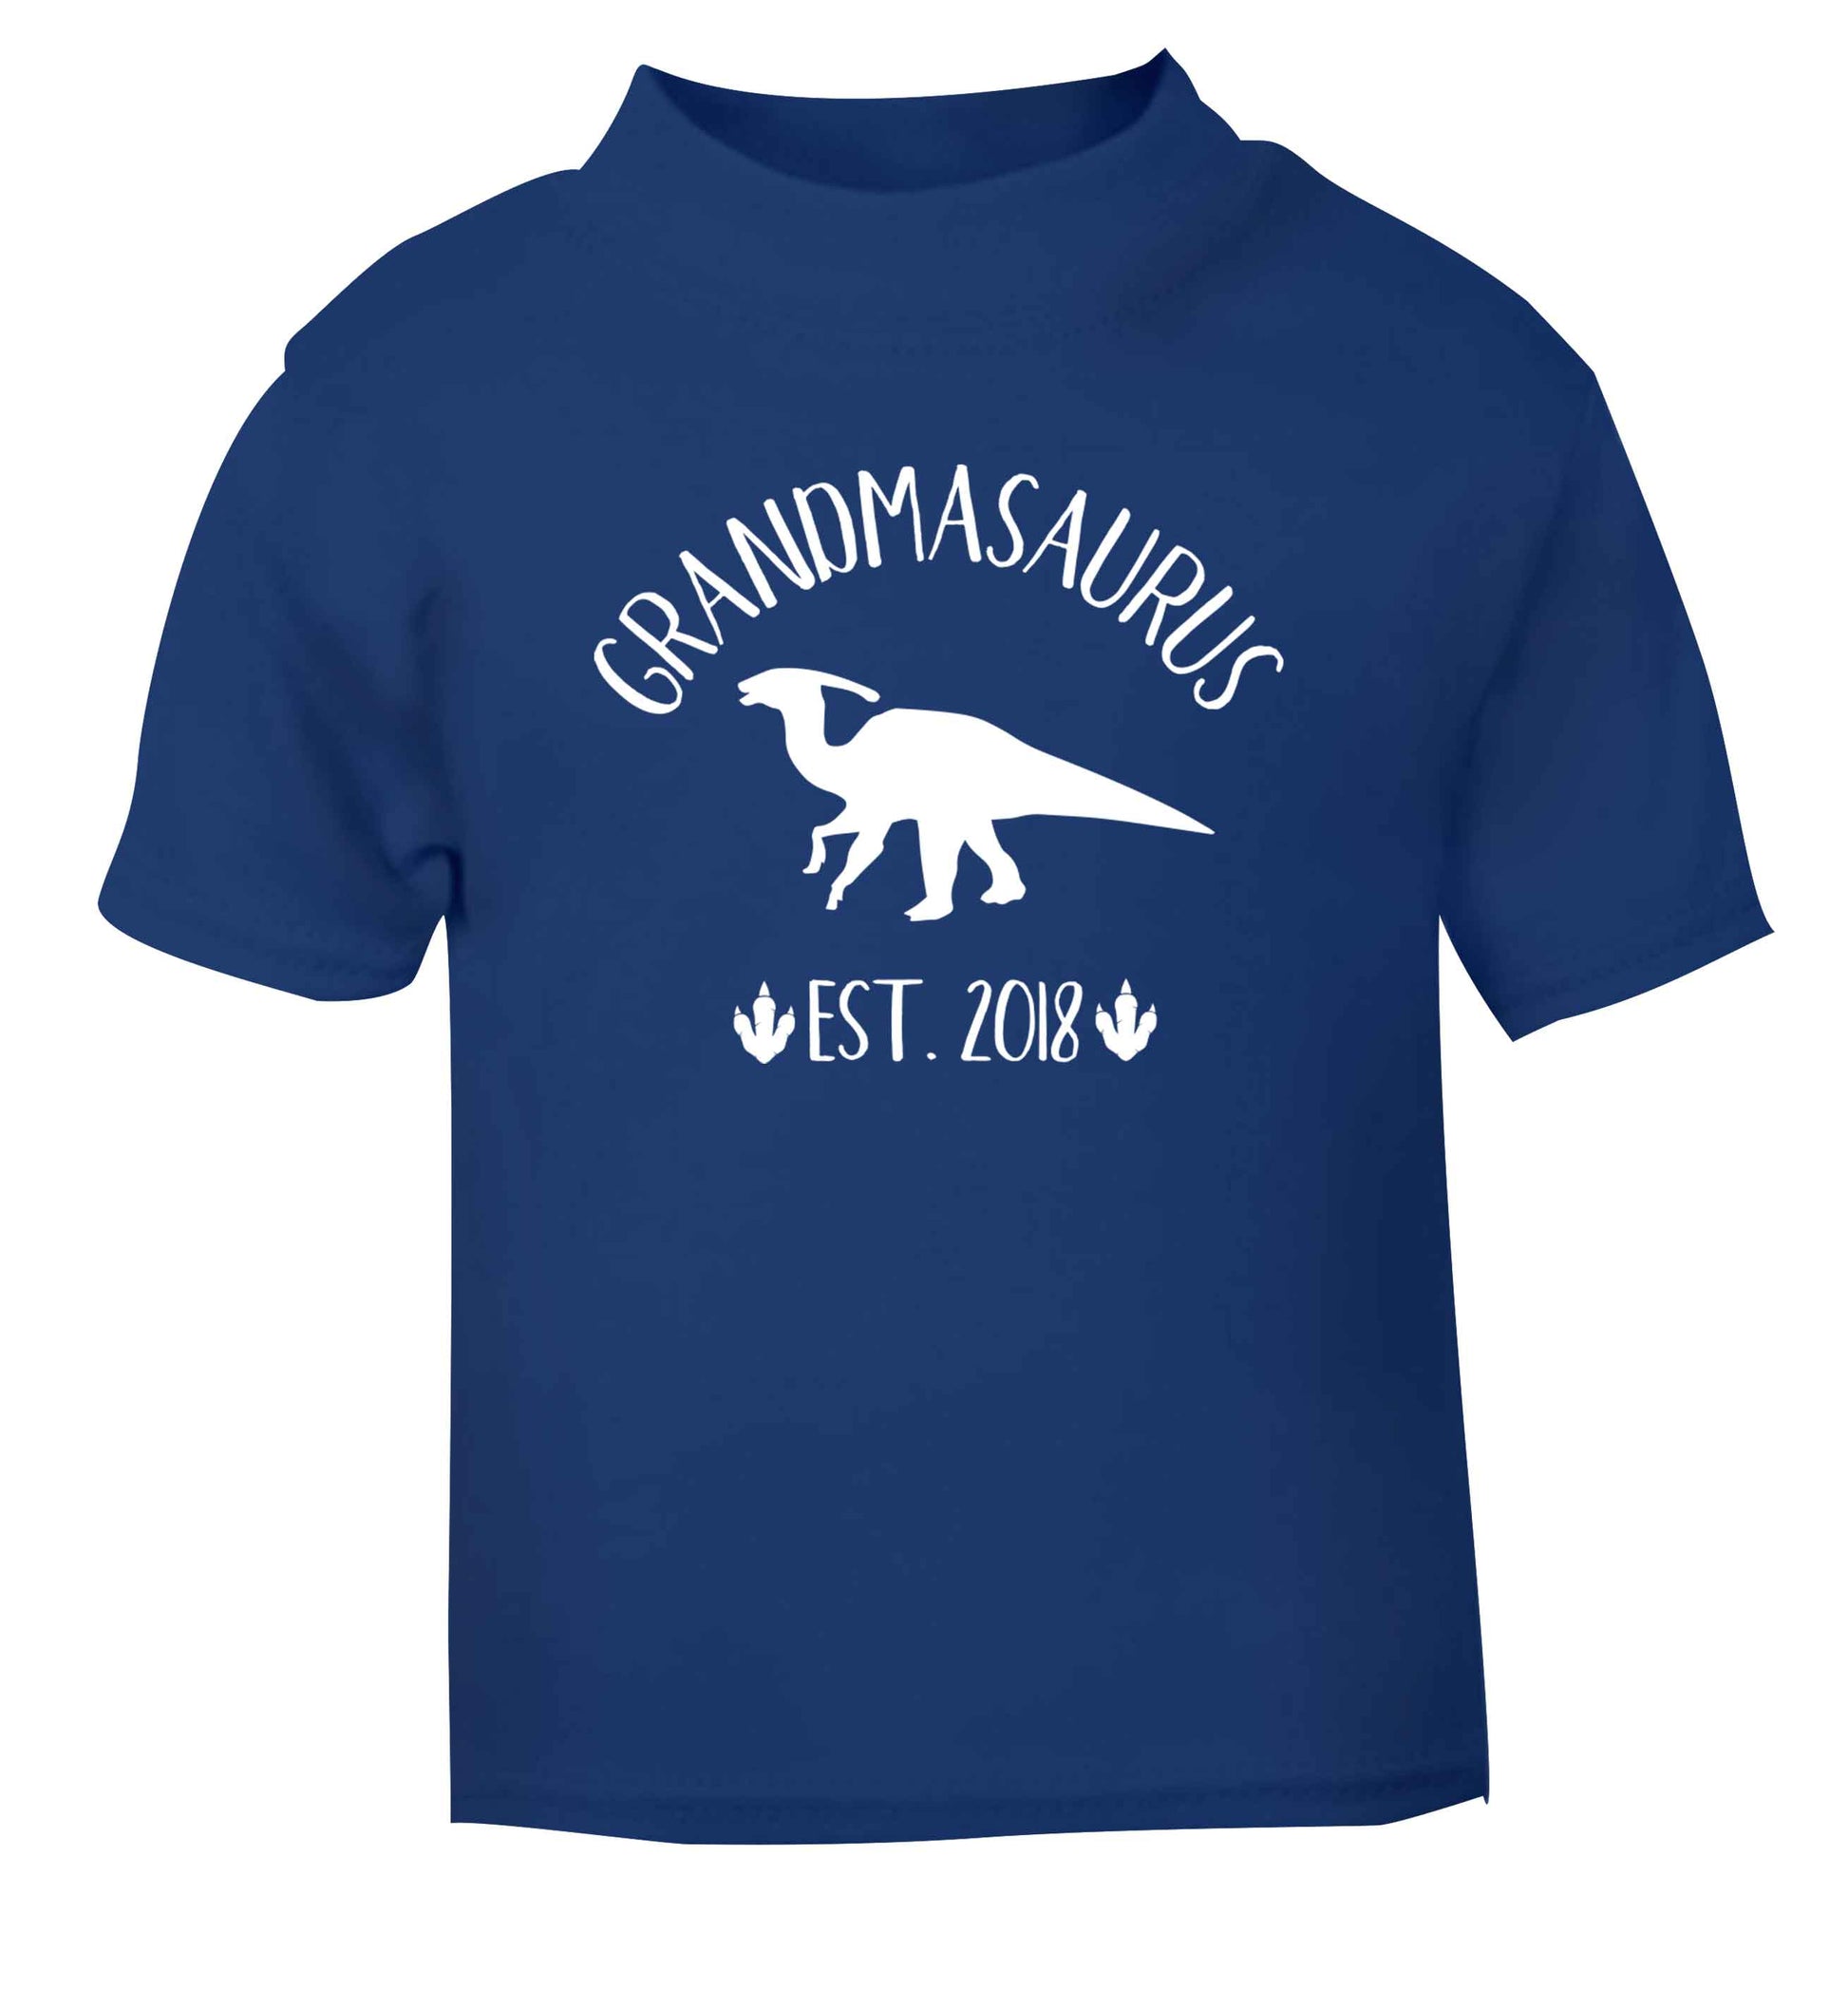 Personalised grandmasaurus since (custom date) blue Baby Toddler Tshirt 2 Years